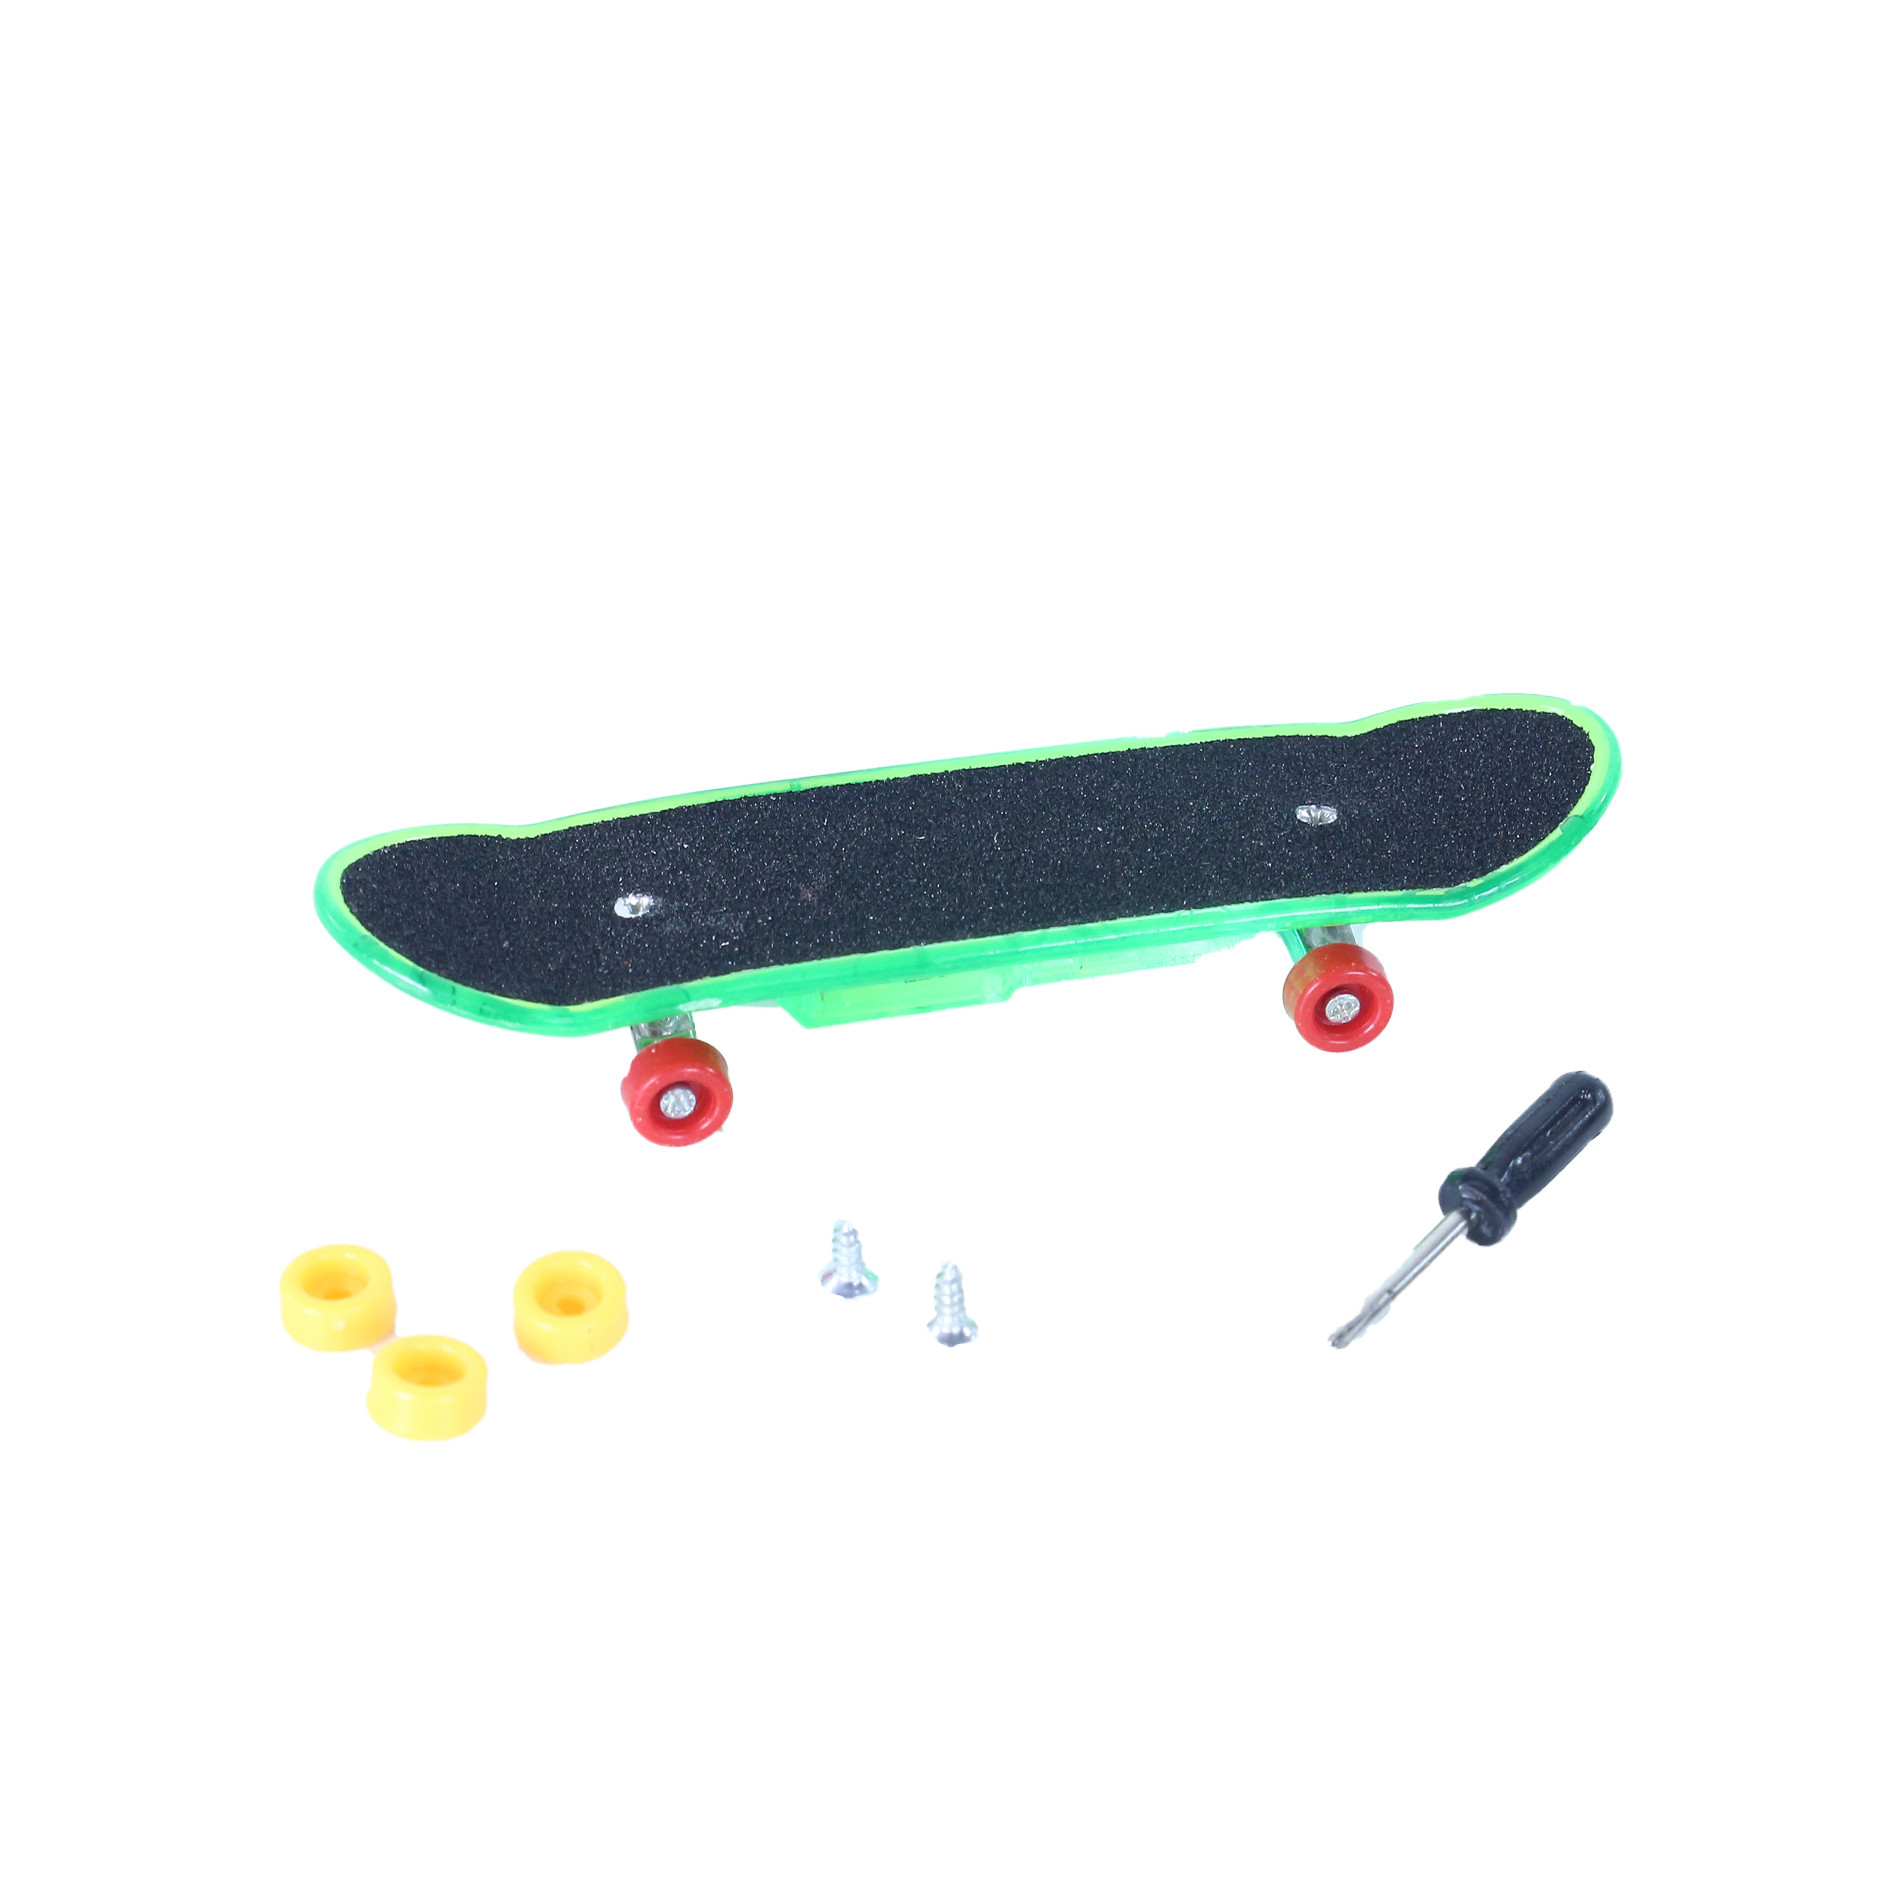 Screw skateboard with light 3 types